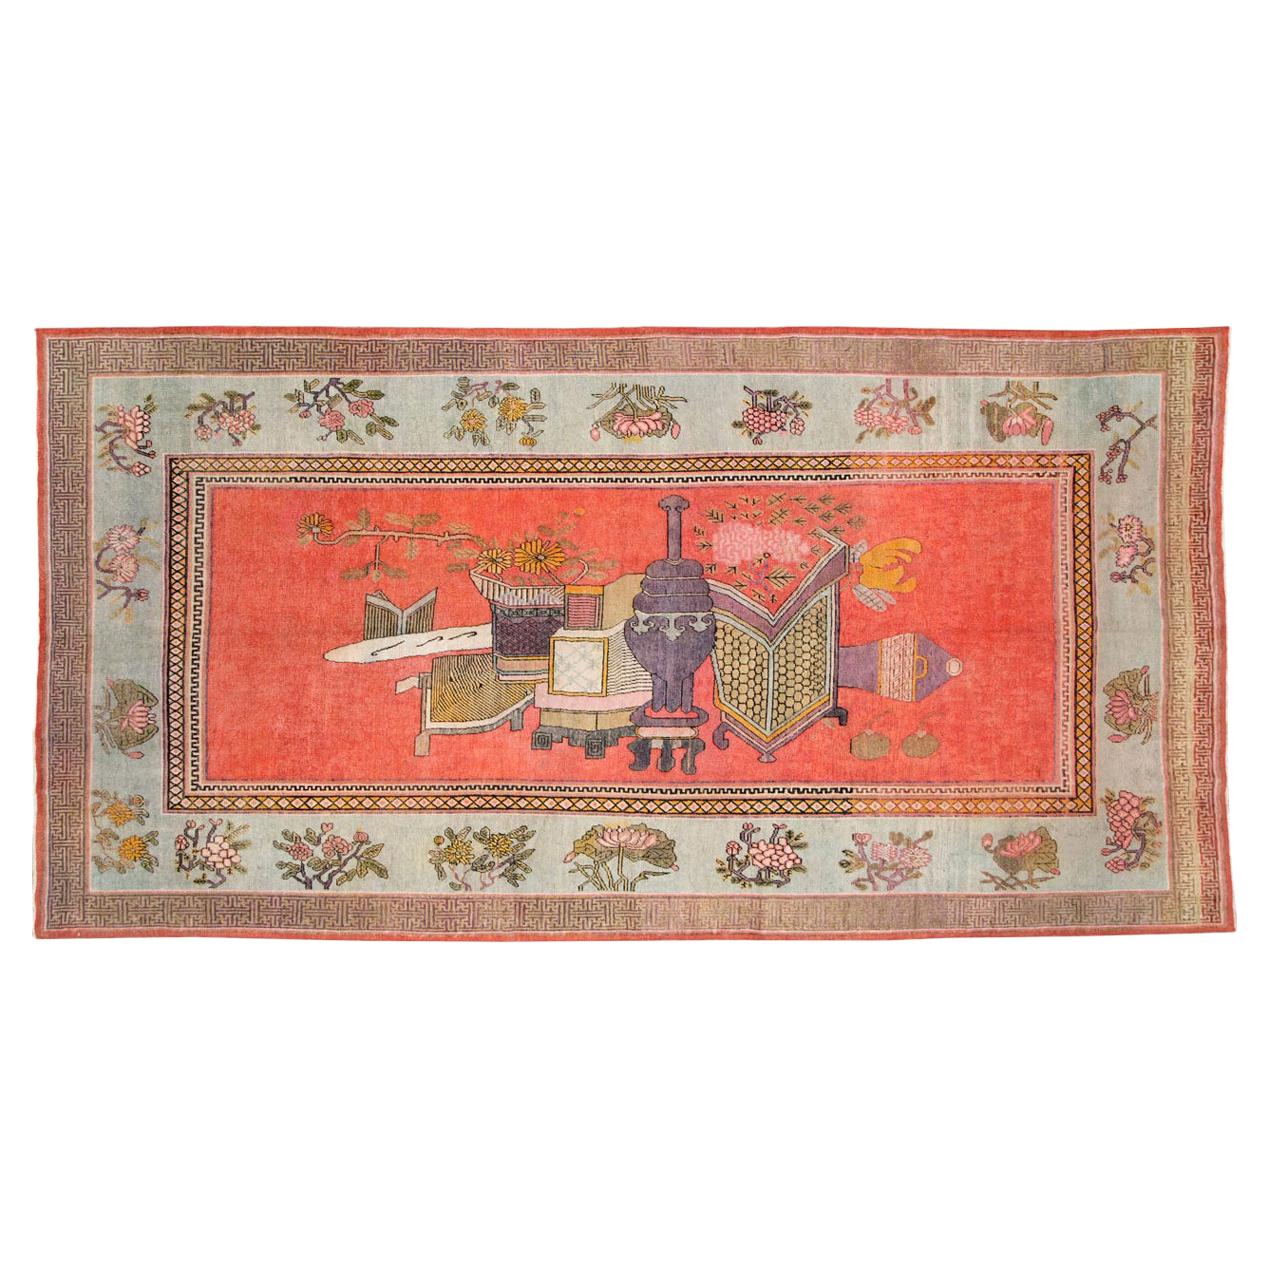 Early 20th Century Handmade East Turkestan Khotan Pictorial Vase Gallery Carpet